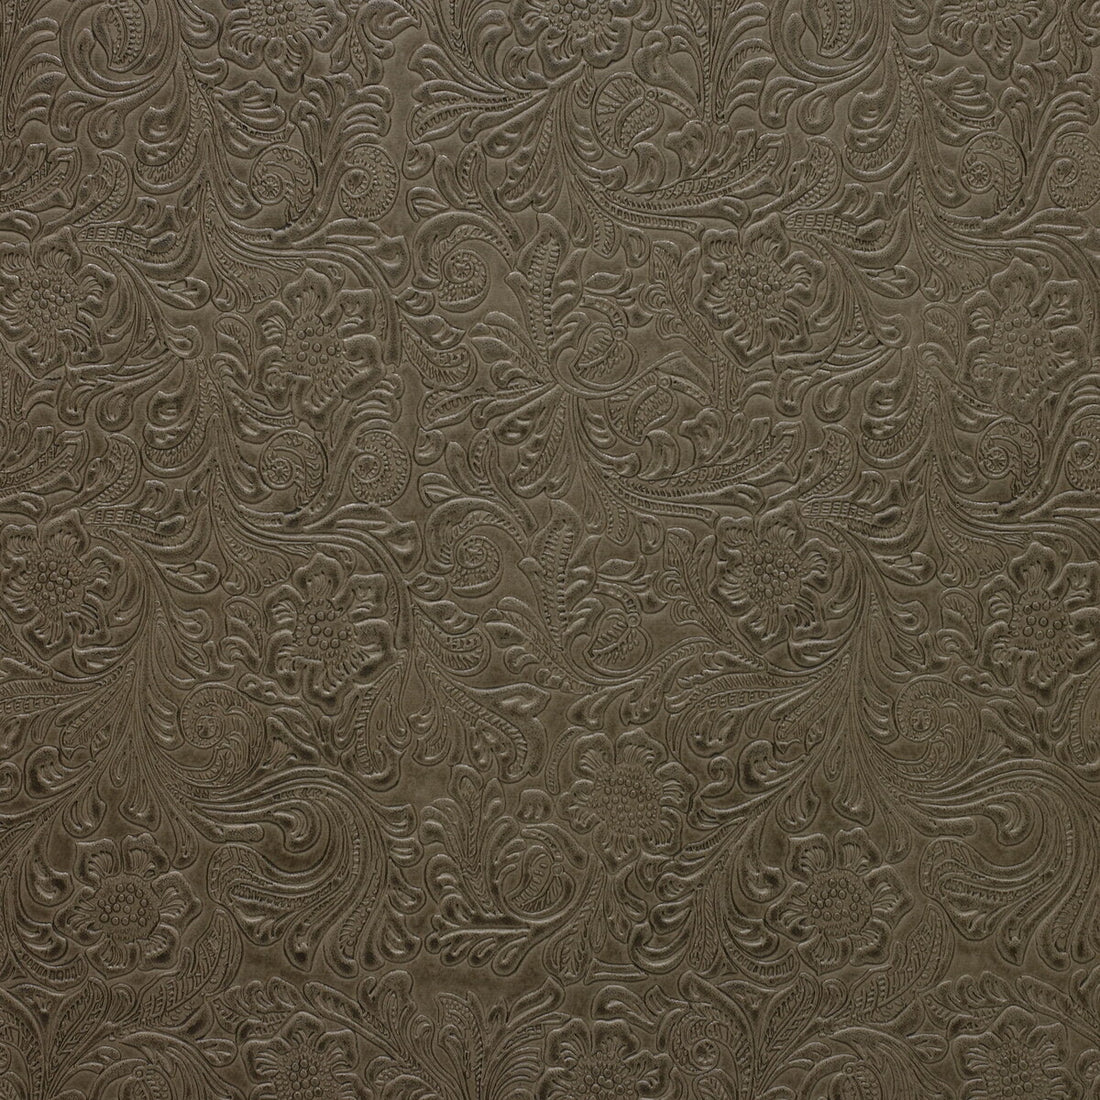 Kravet Design fabric in donahue-106 color - pattern DONAHUE.106.0 - by Kravet Design